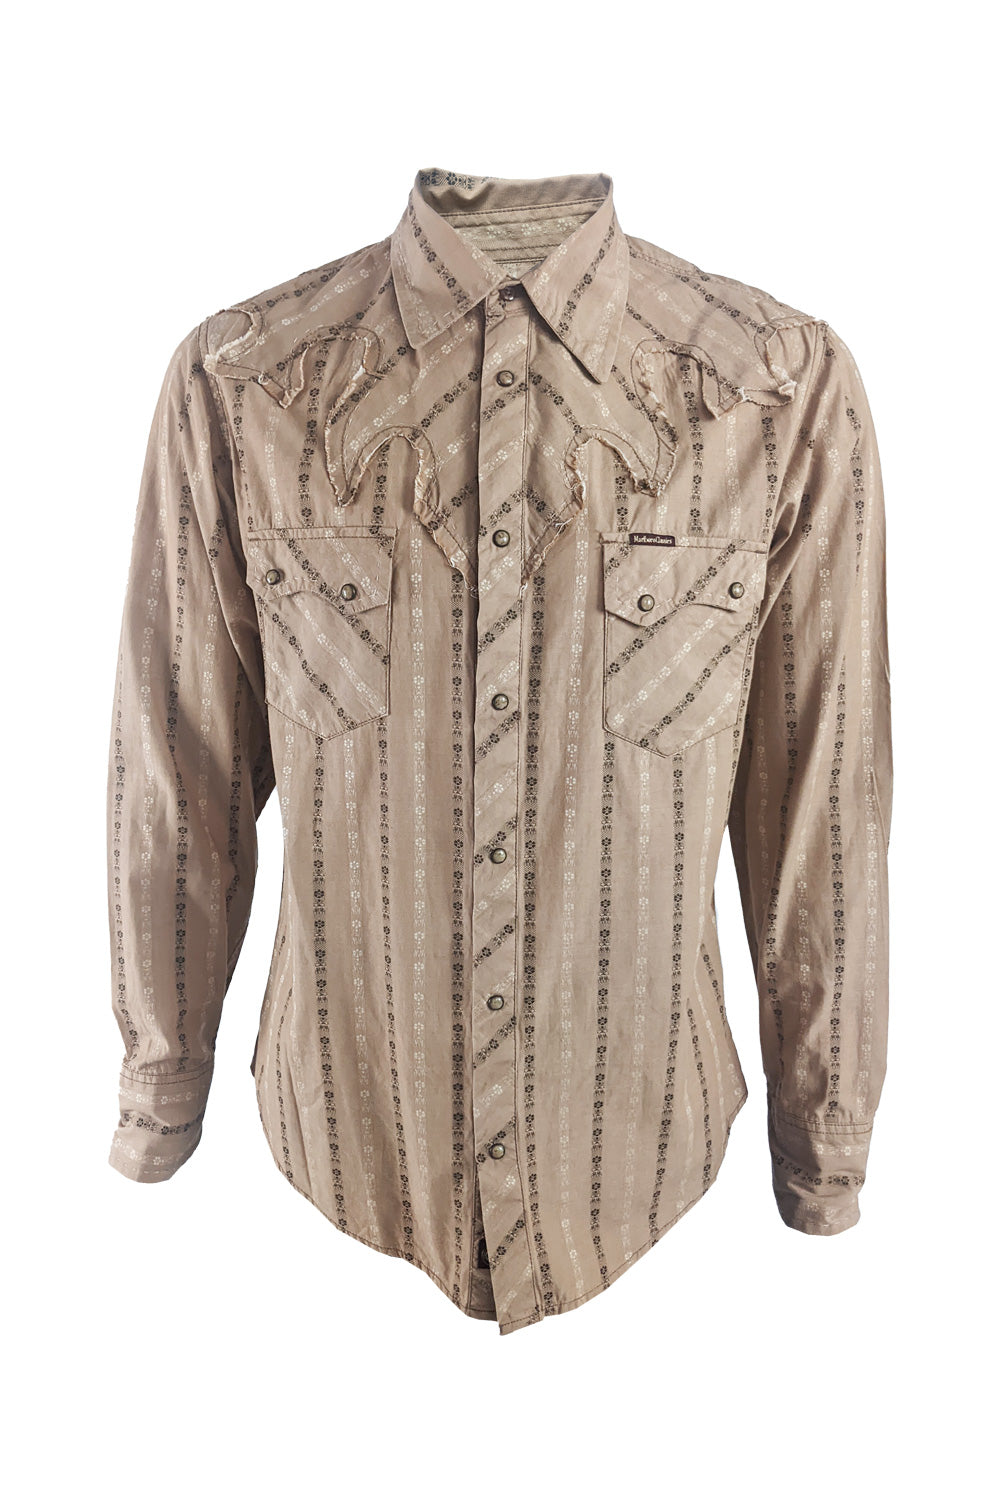 Marlboro Classics Vintage Mens Western Jacquard Shirt, 1980s